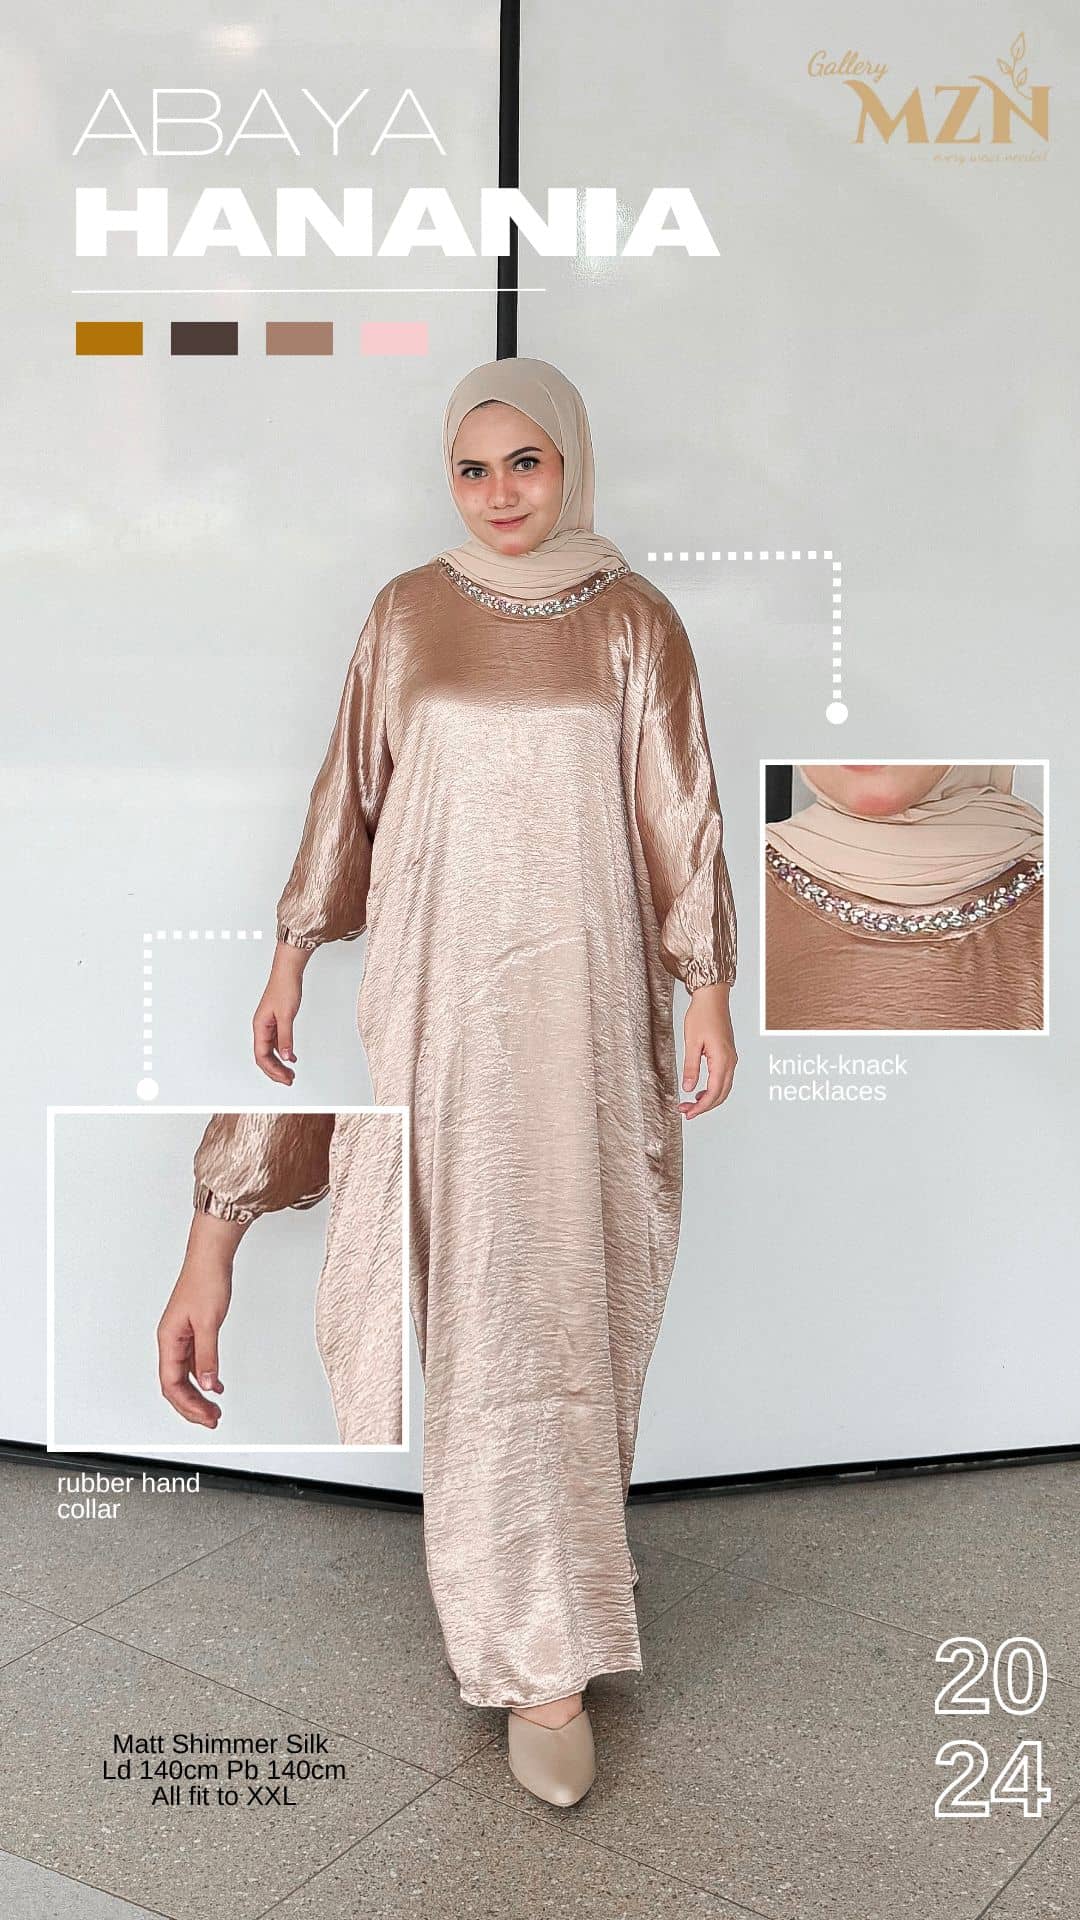 Abaya Hanania Shimmer Silk, Glossy, Metalic Shining Foto Model #5